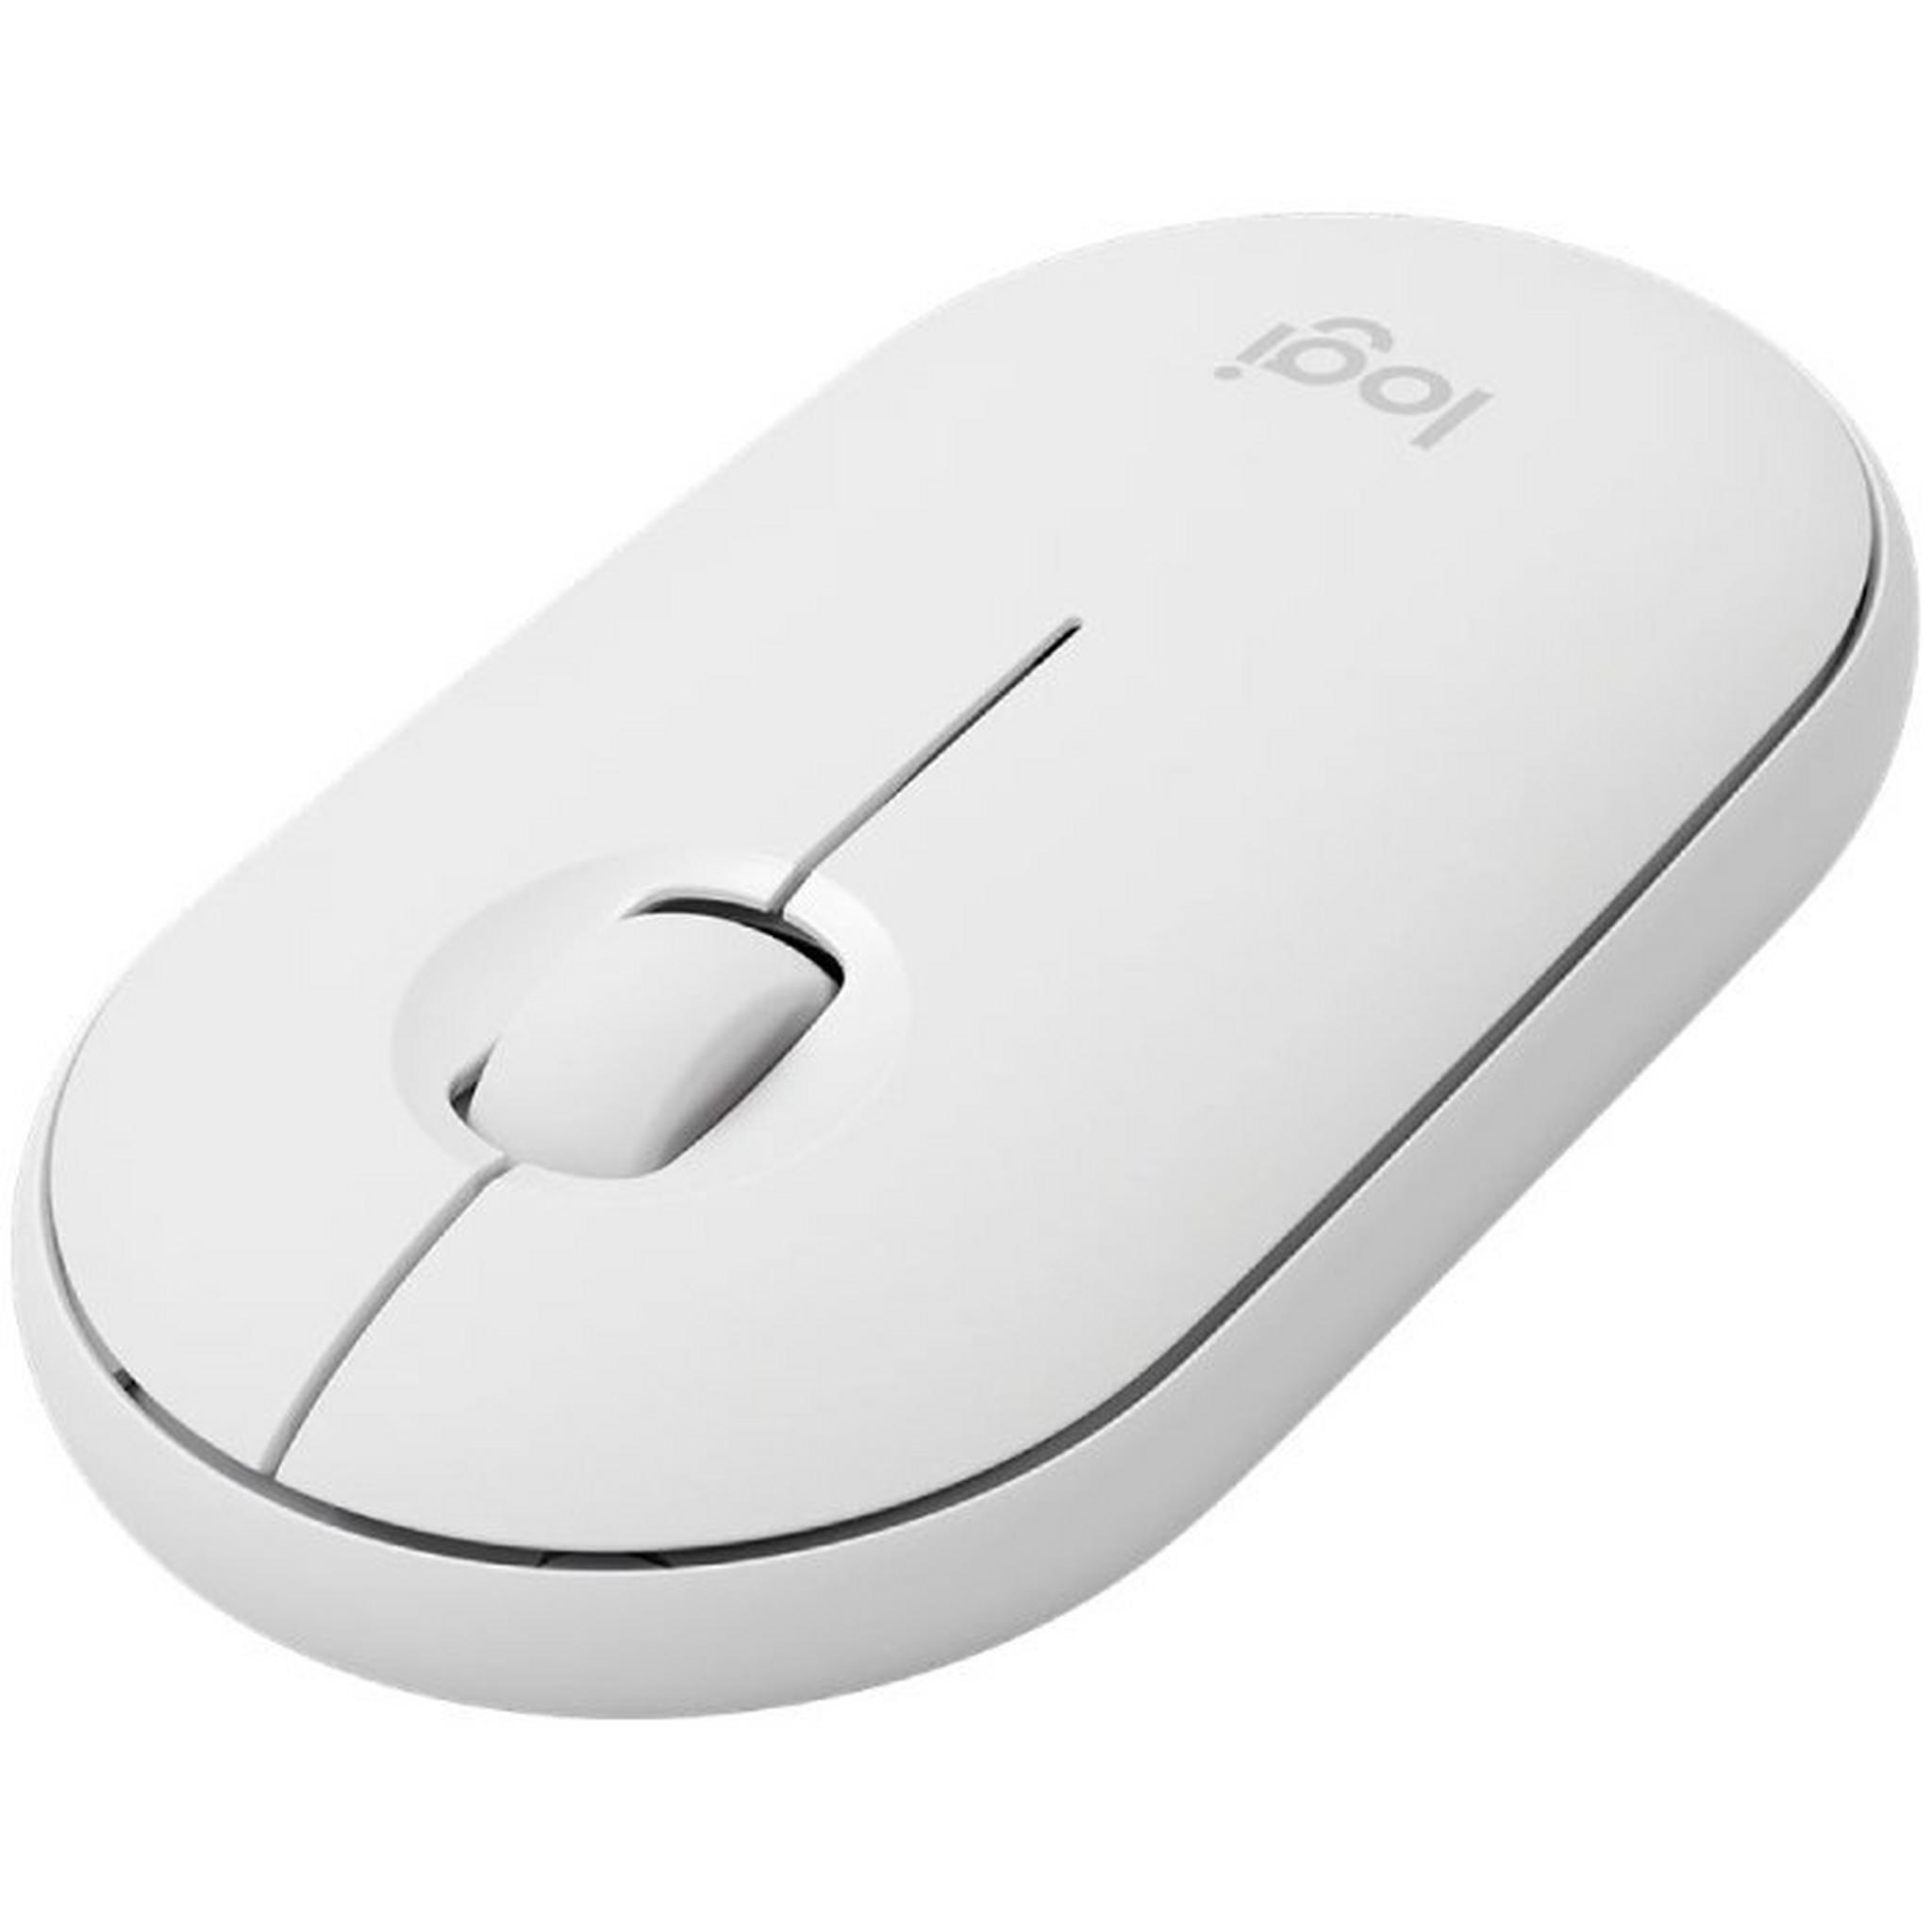 Logitech M350s Pebble Wireless Mouse 2, 910-007013 – White